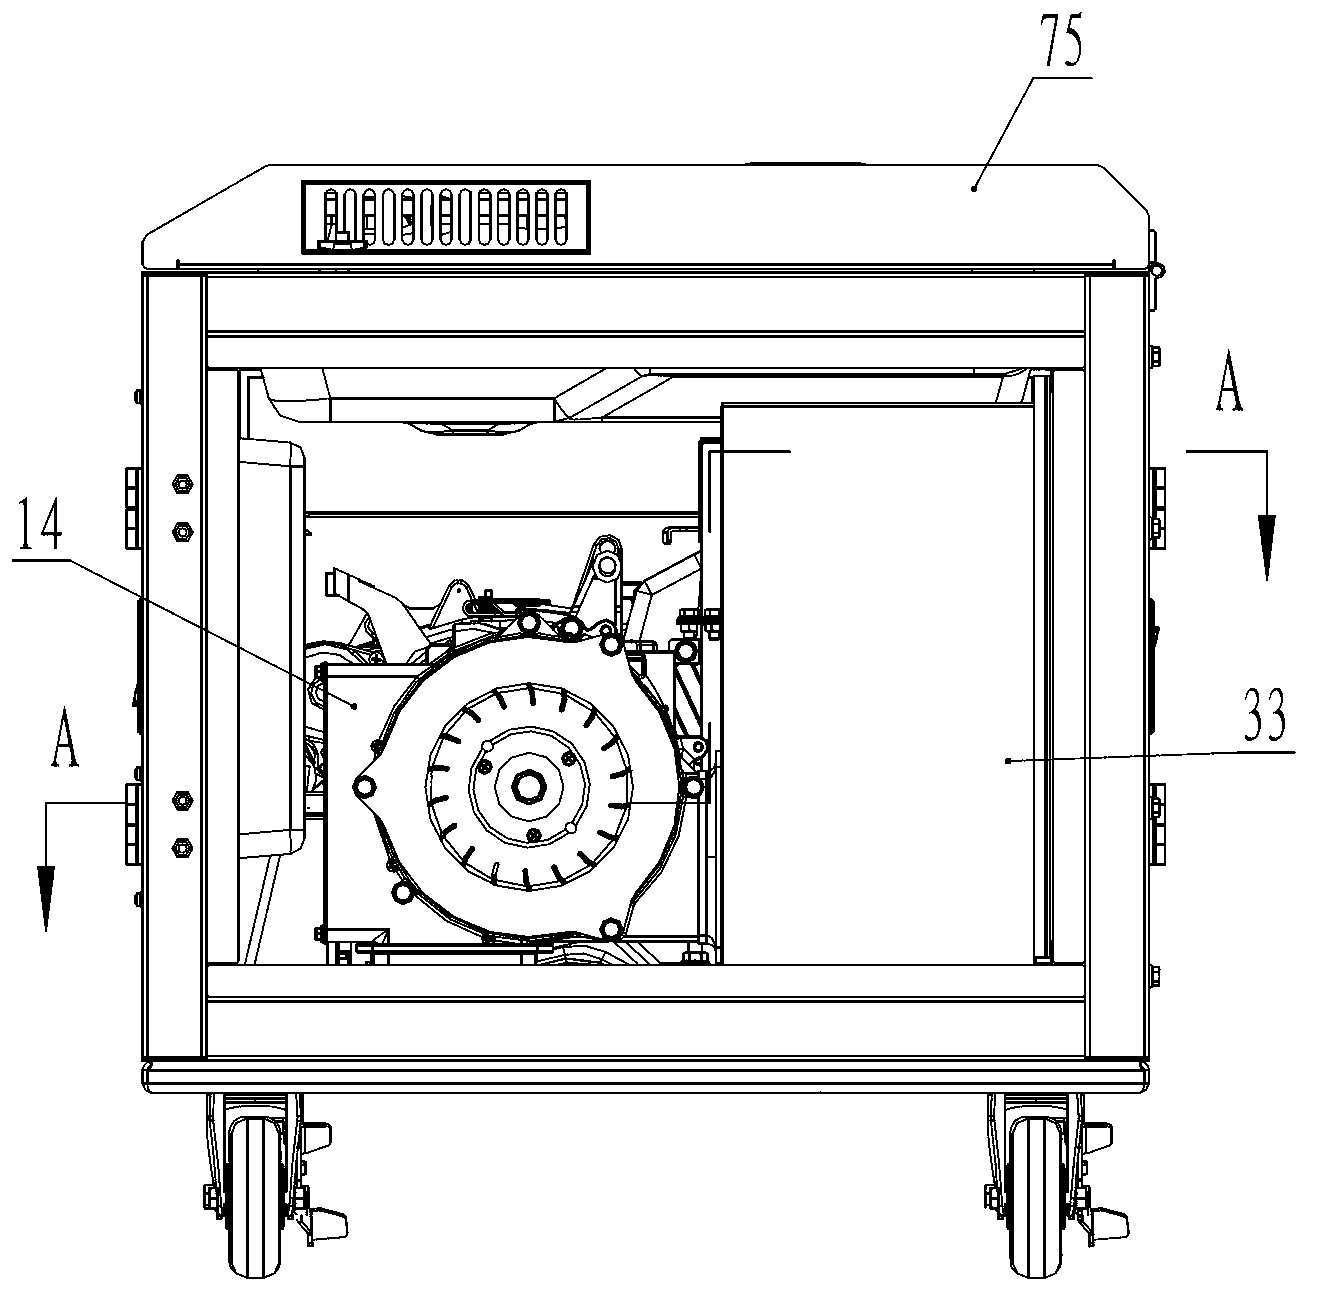 Engine-driven generator set